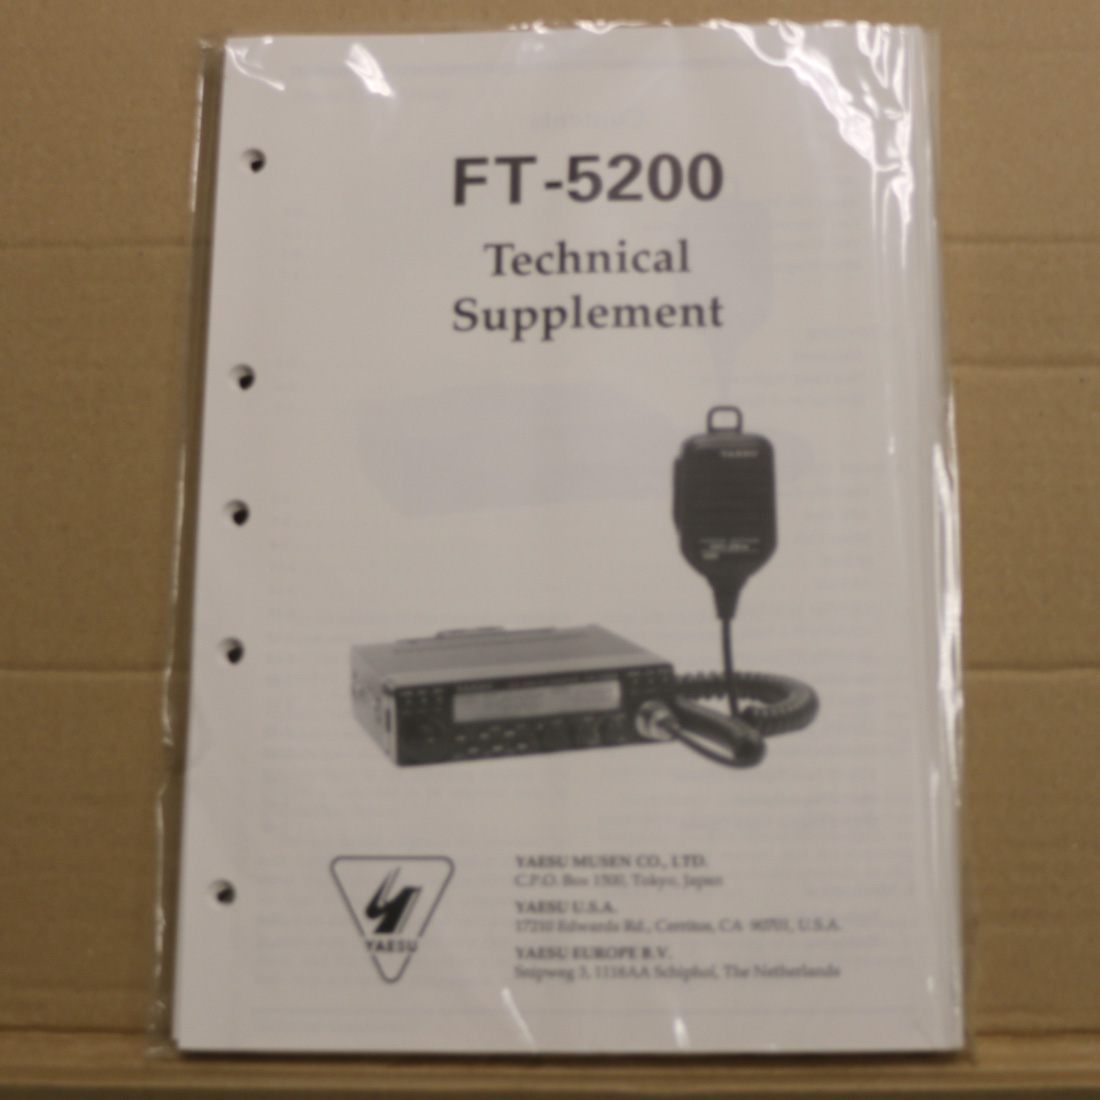 Yaesu FT-5200 Technical Supplement